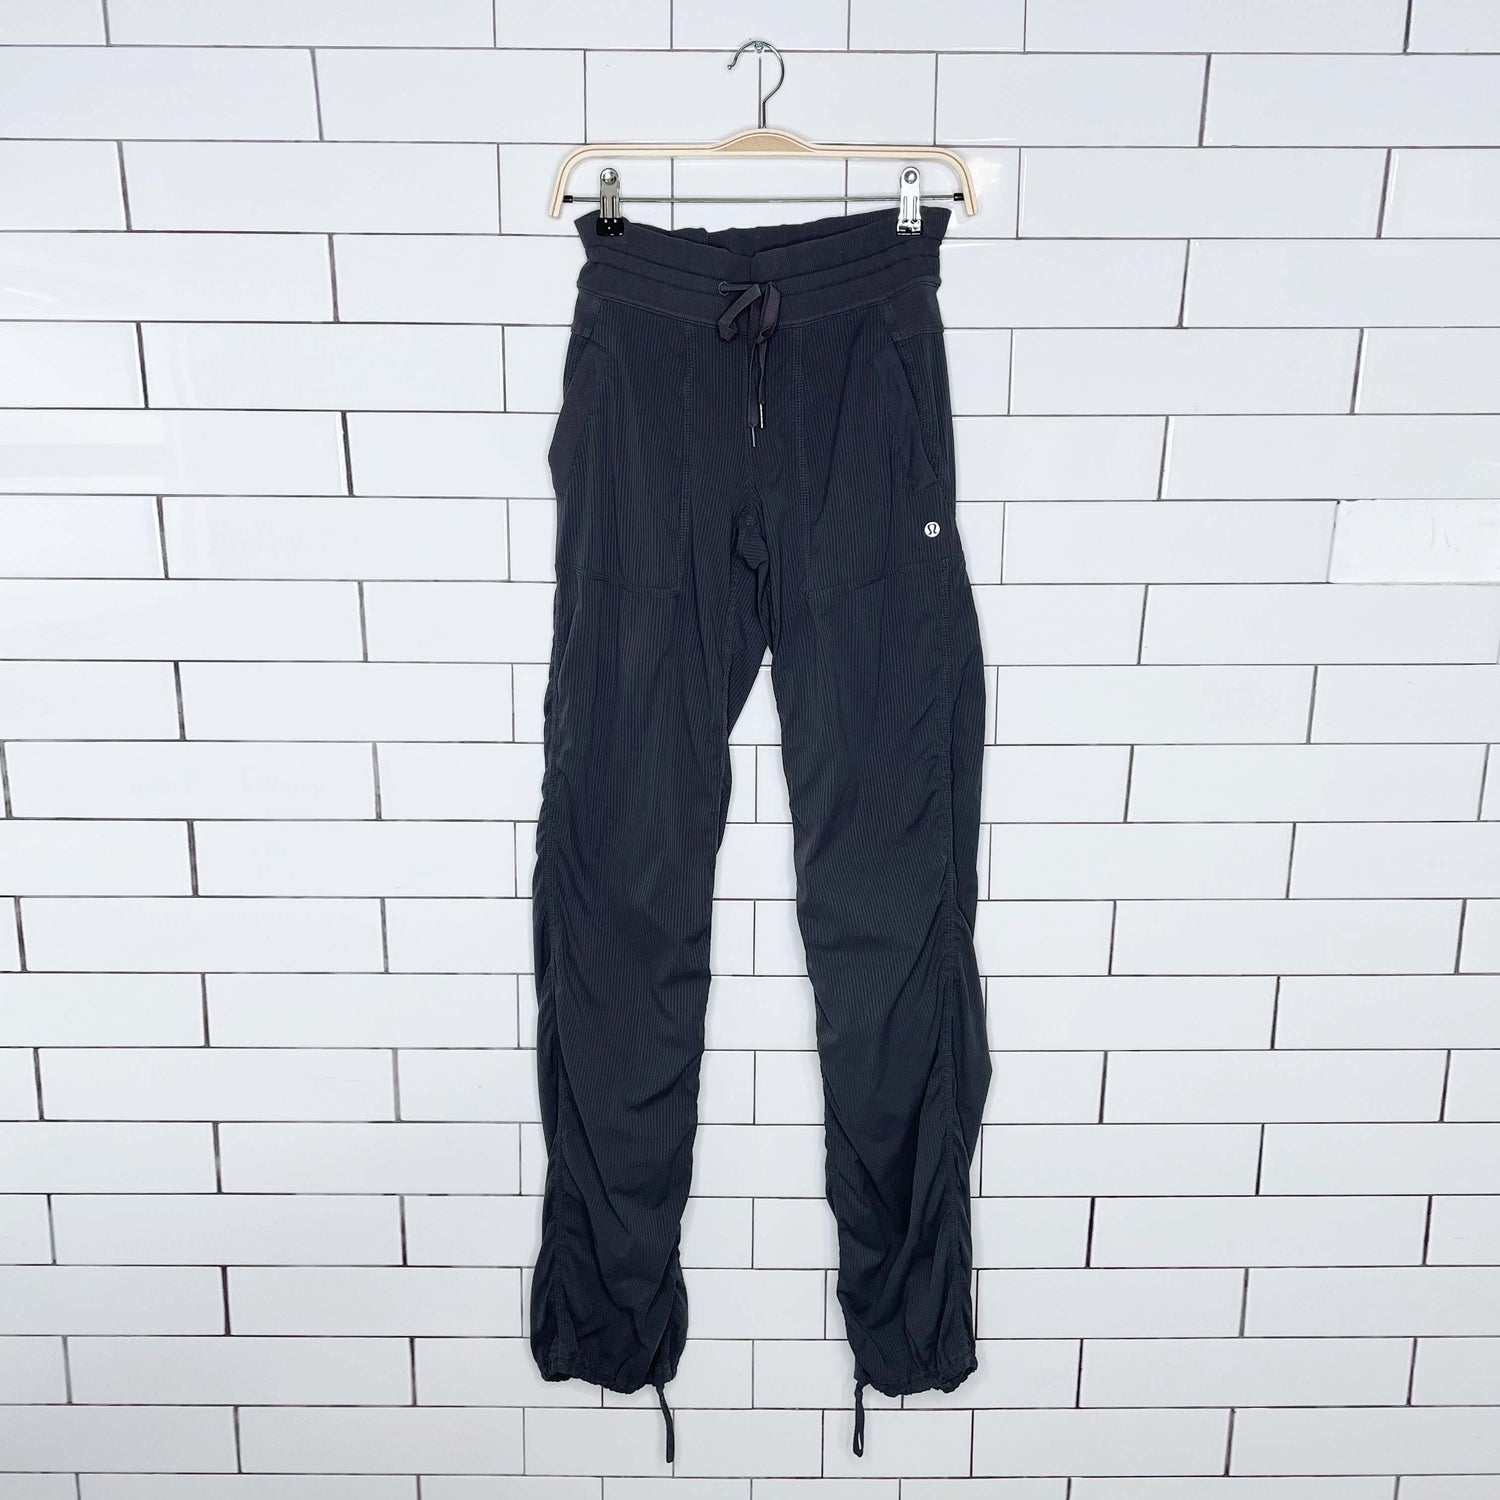 lululemon grey dance studio pants unlined - size 2